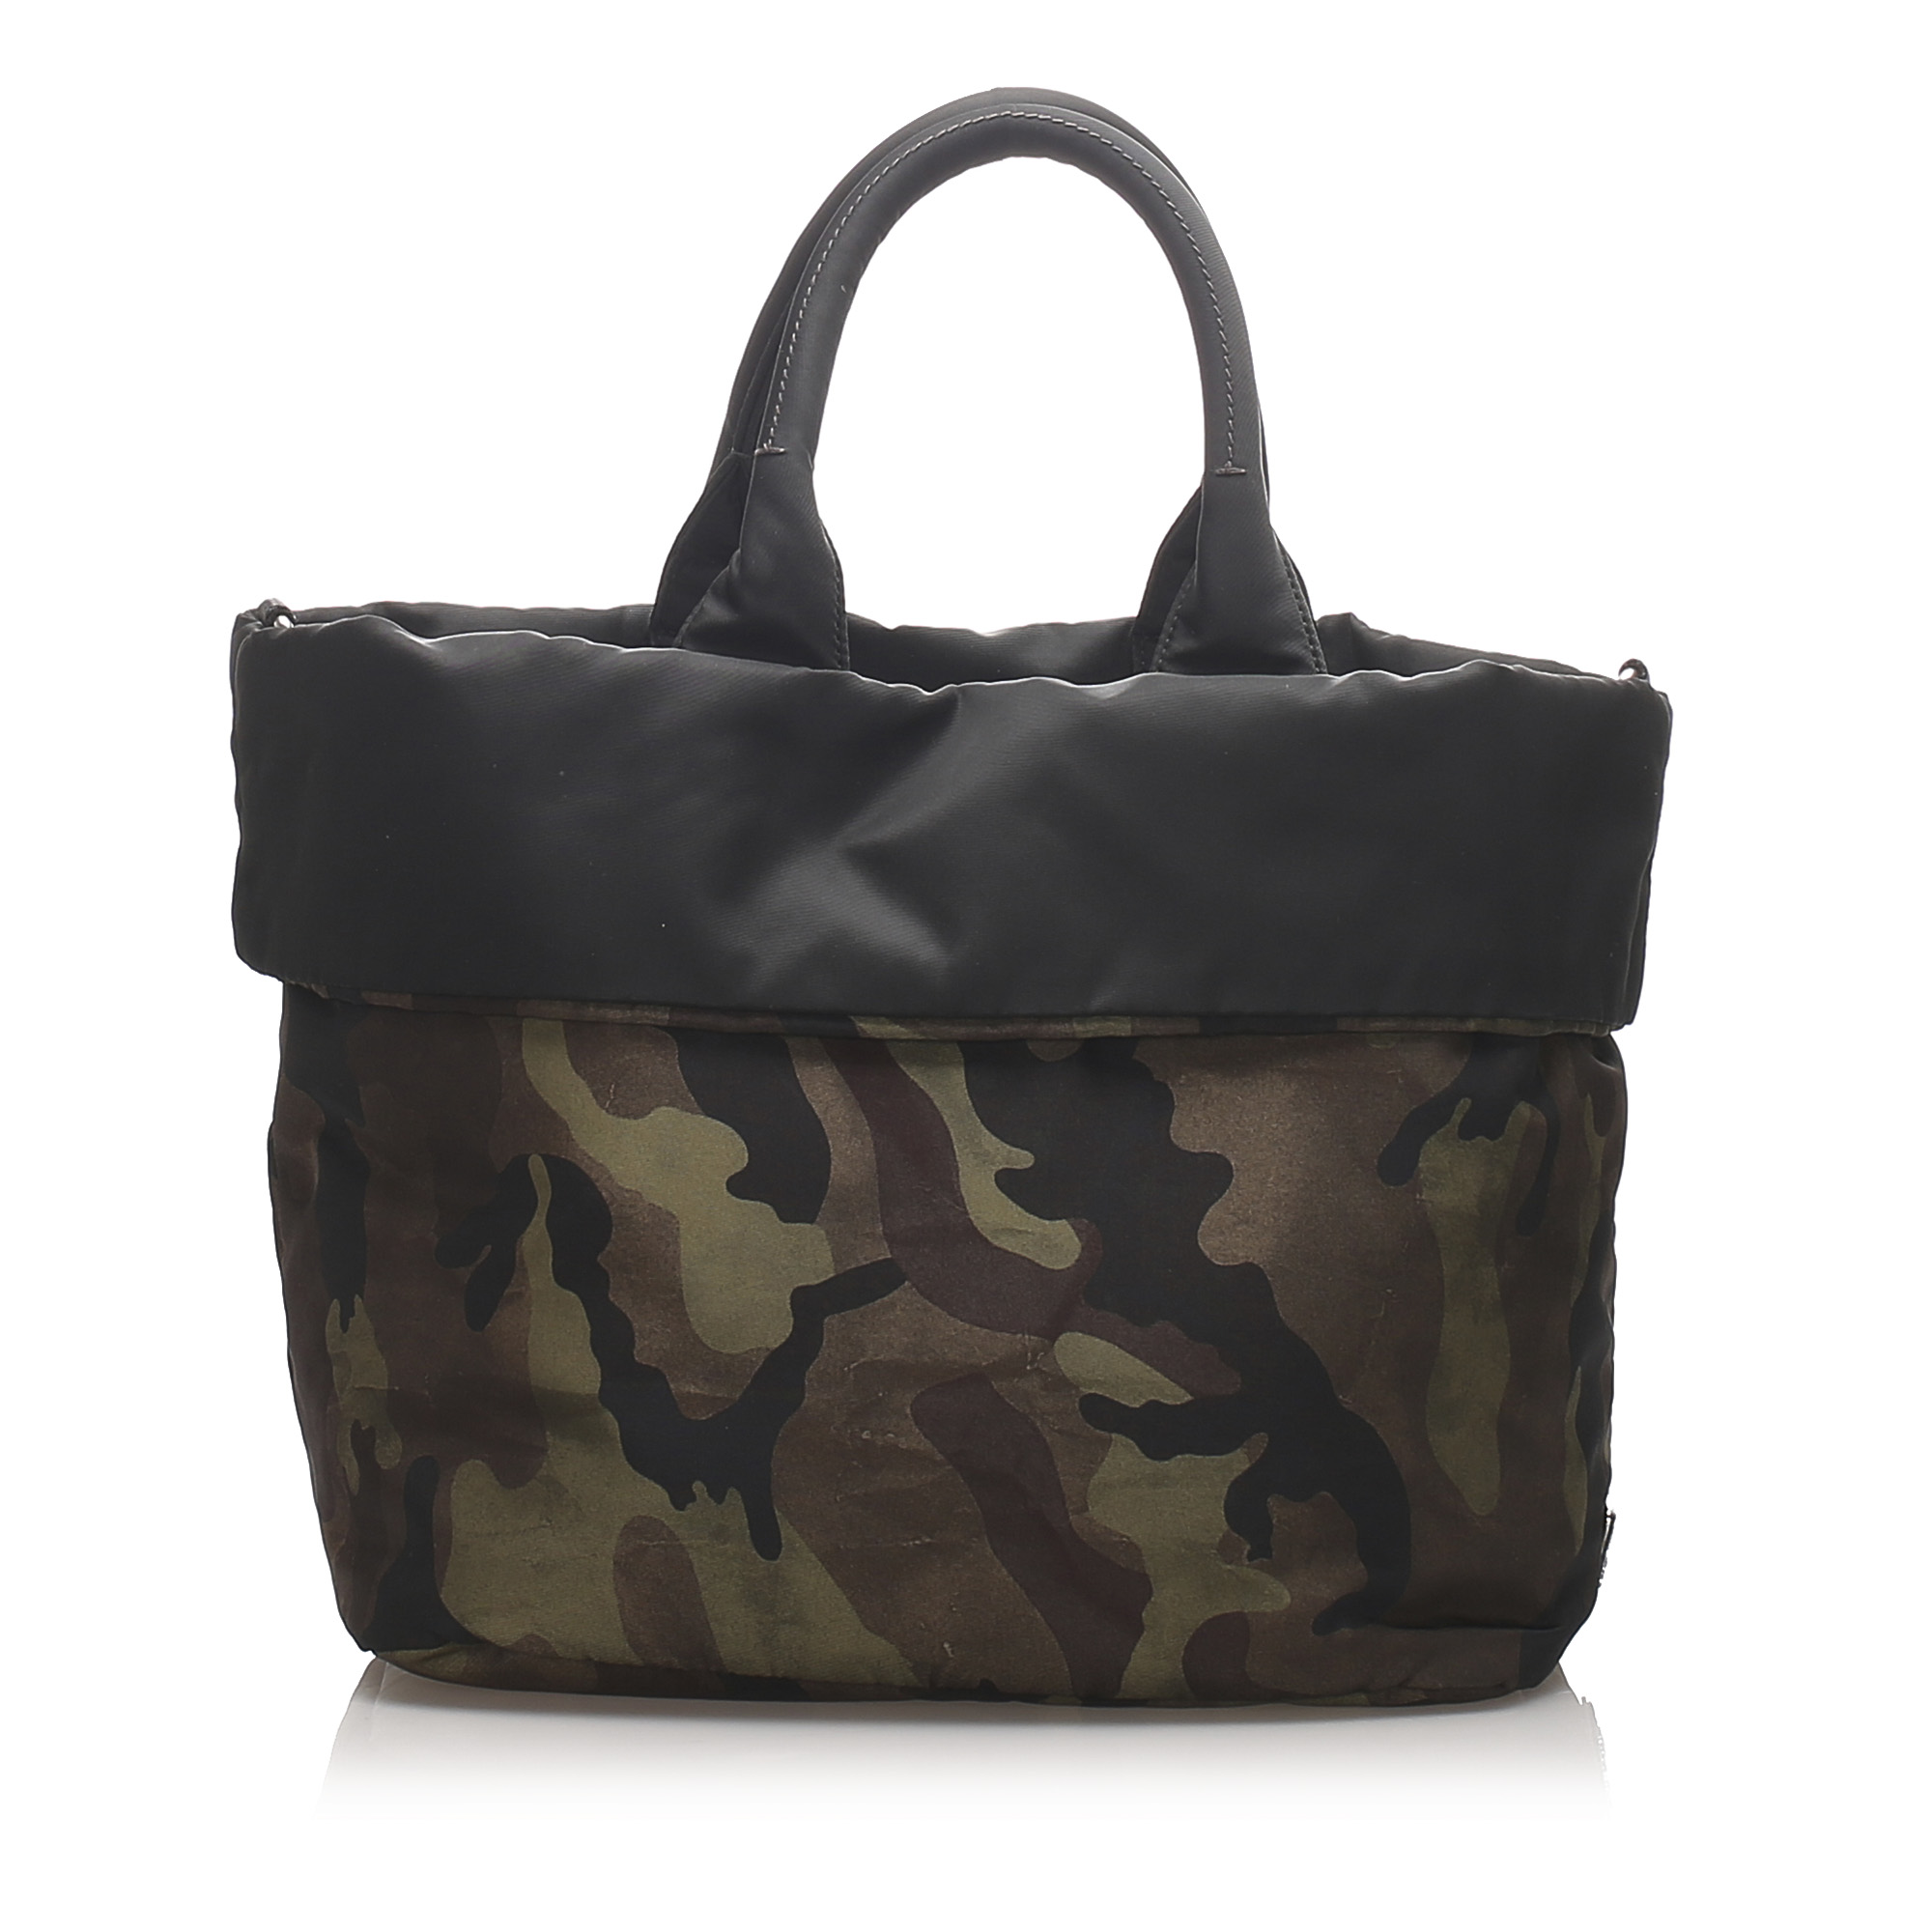 prada camouflage bag